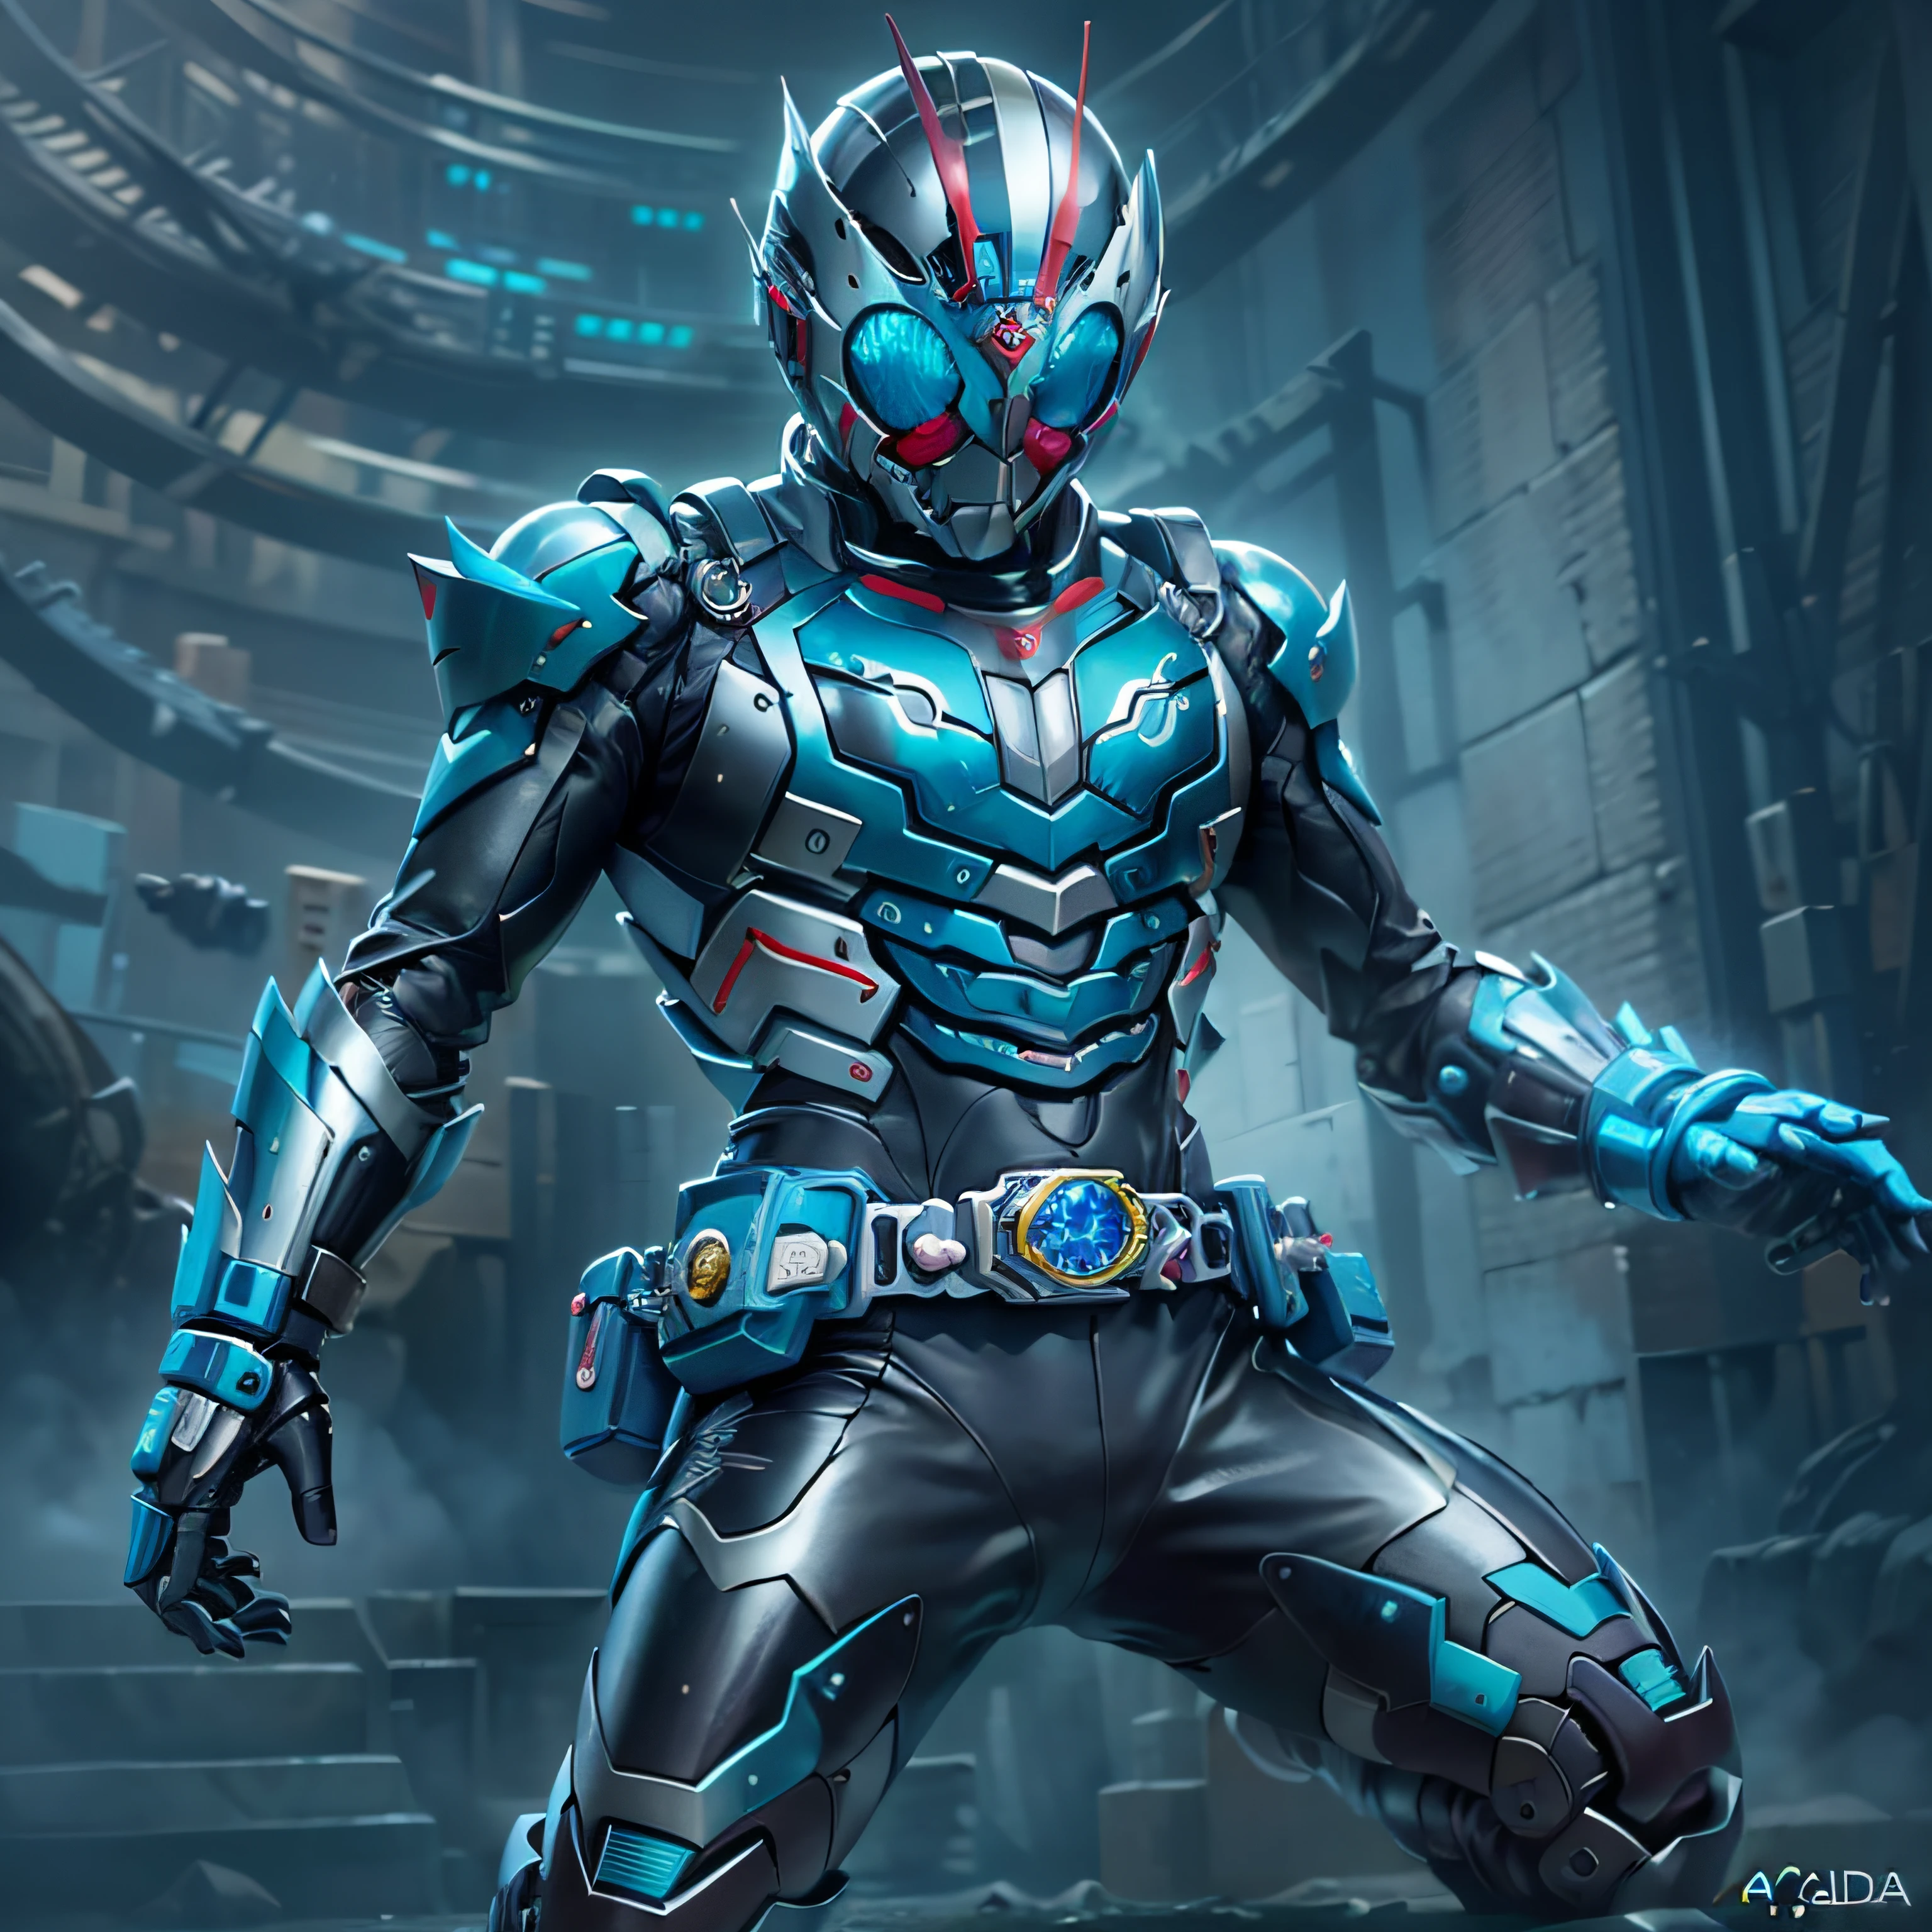 Blue Kamen Rider, Silver armor, gray and black clothes, blue TechSuit, agente secreto, Robot